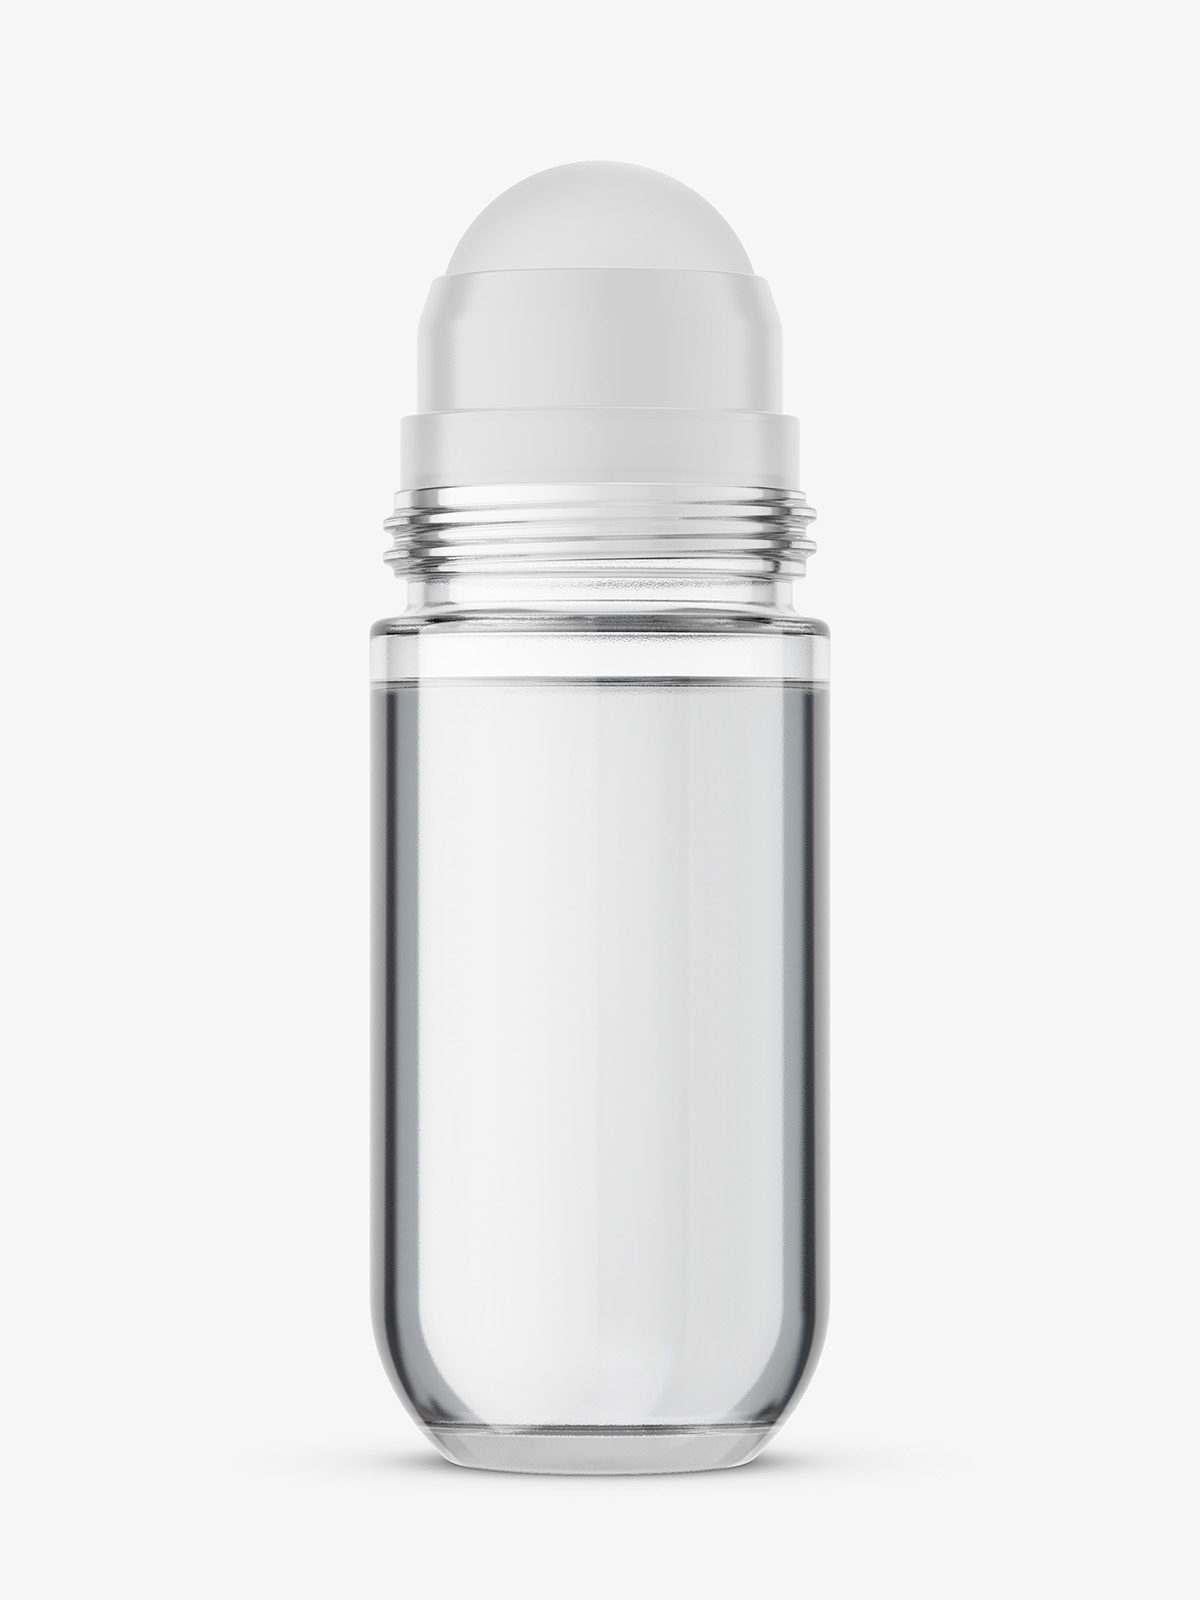 Glass roll-on bottle mockup - Smarty Mockups